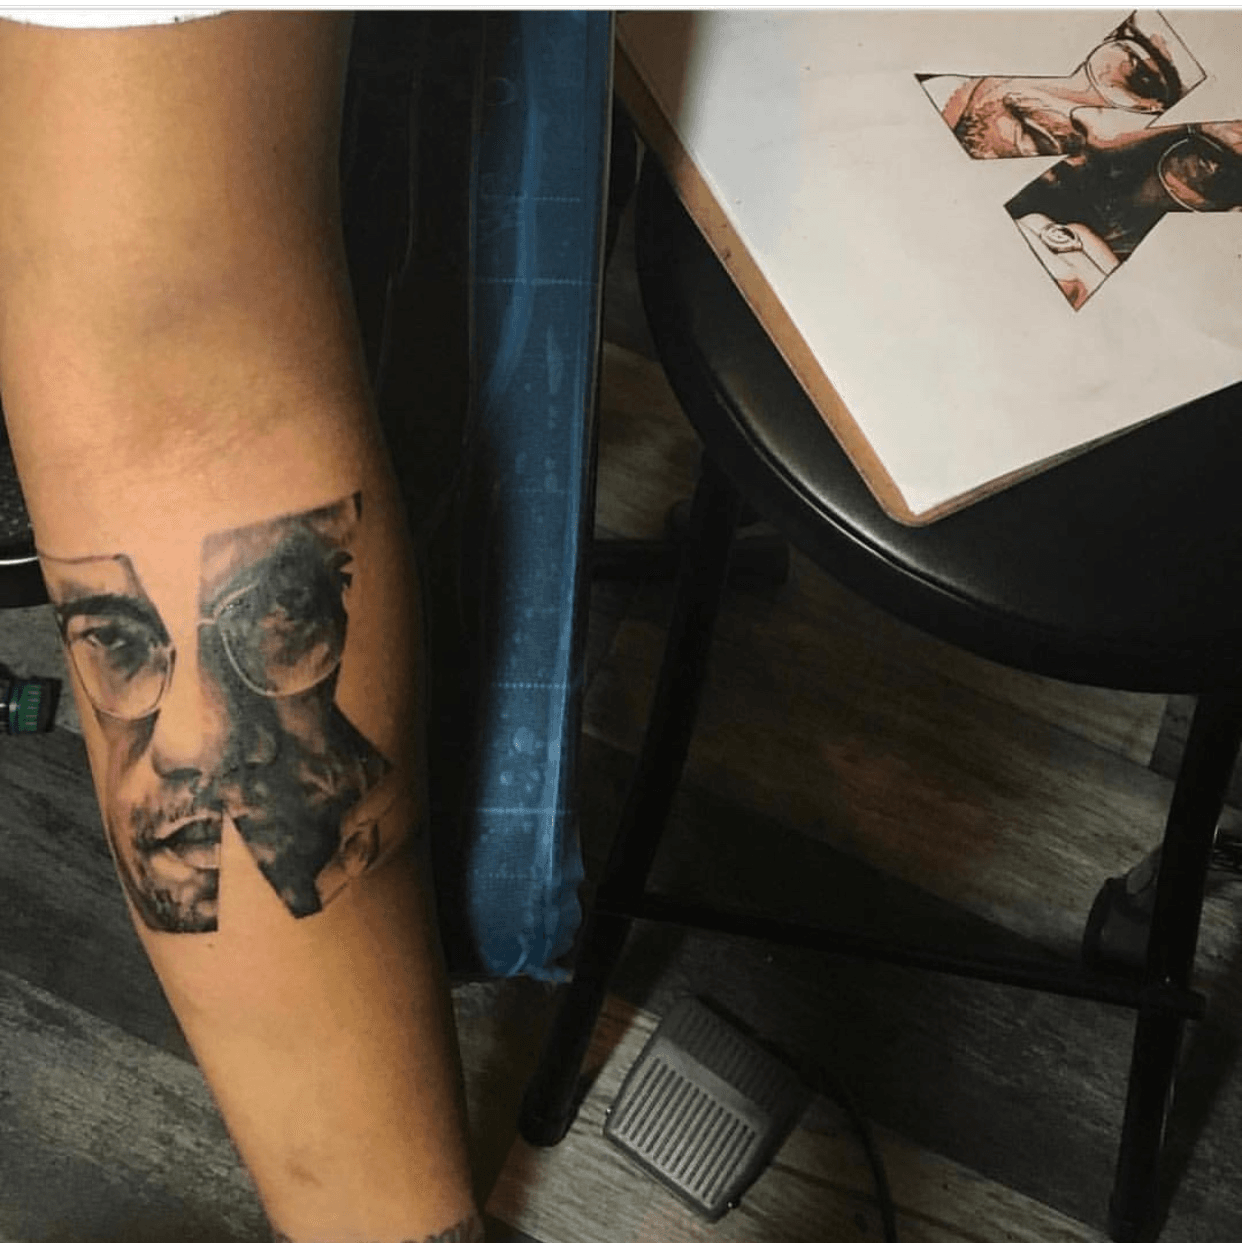 malcolmx in Tattoos  Search in 13M Tattoos Now  Tattoodo